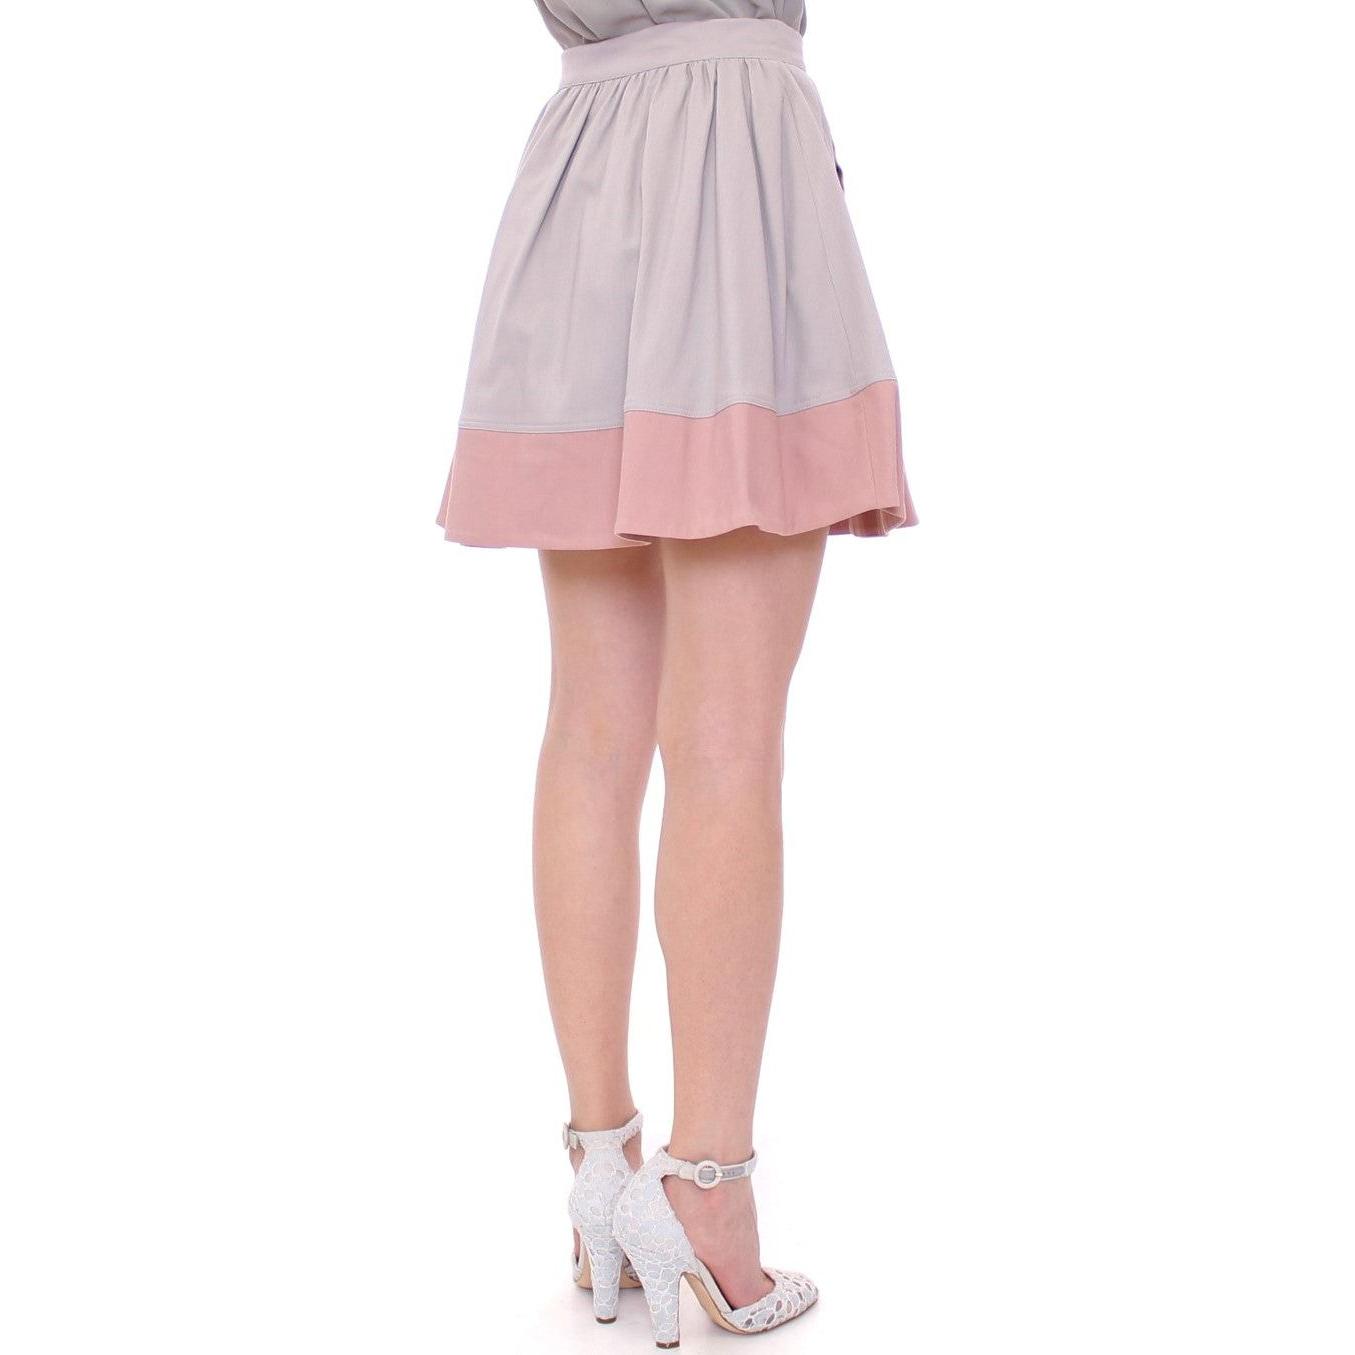 Comeforbreakfast Sleek Pleated Mini Skirt in Pink and Gray pink-gray-mini-short-pleated-skirt 219781-pink-gray-mini-short-pleated-skirt-3.jpg